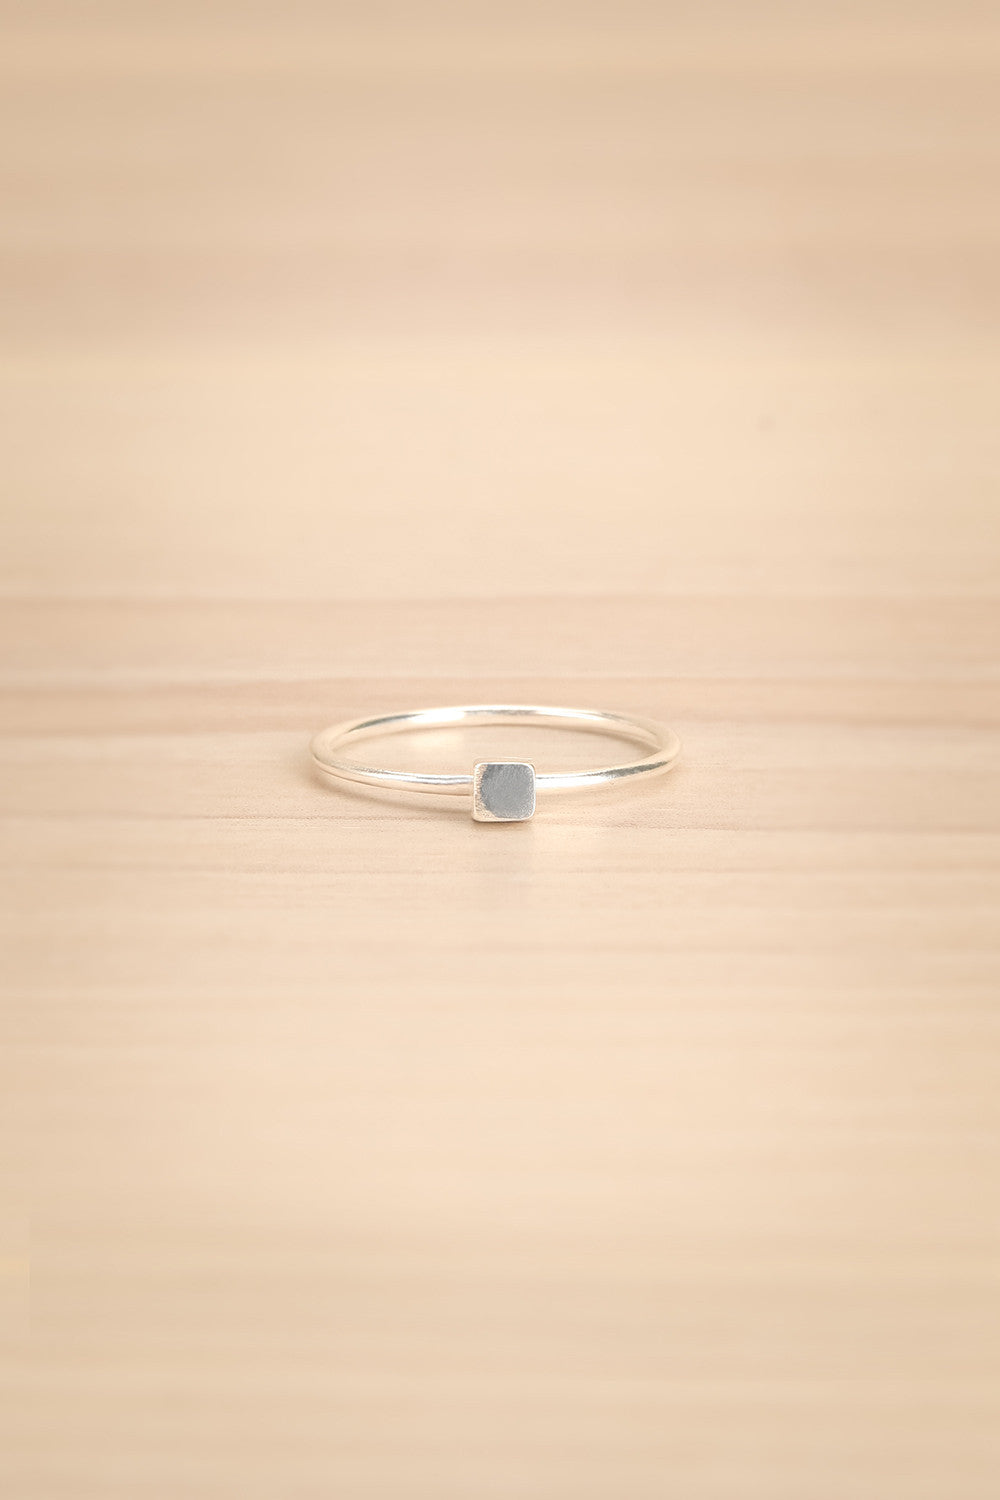 Bordano - Delicate sterling silver ring 3